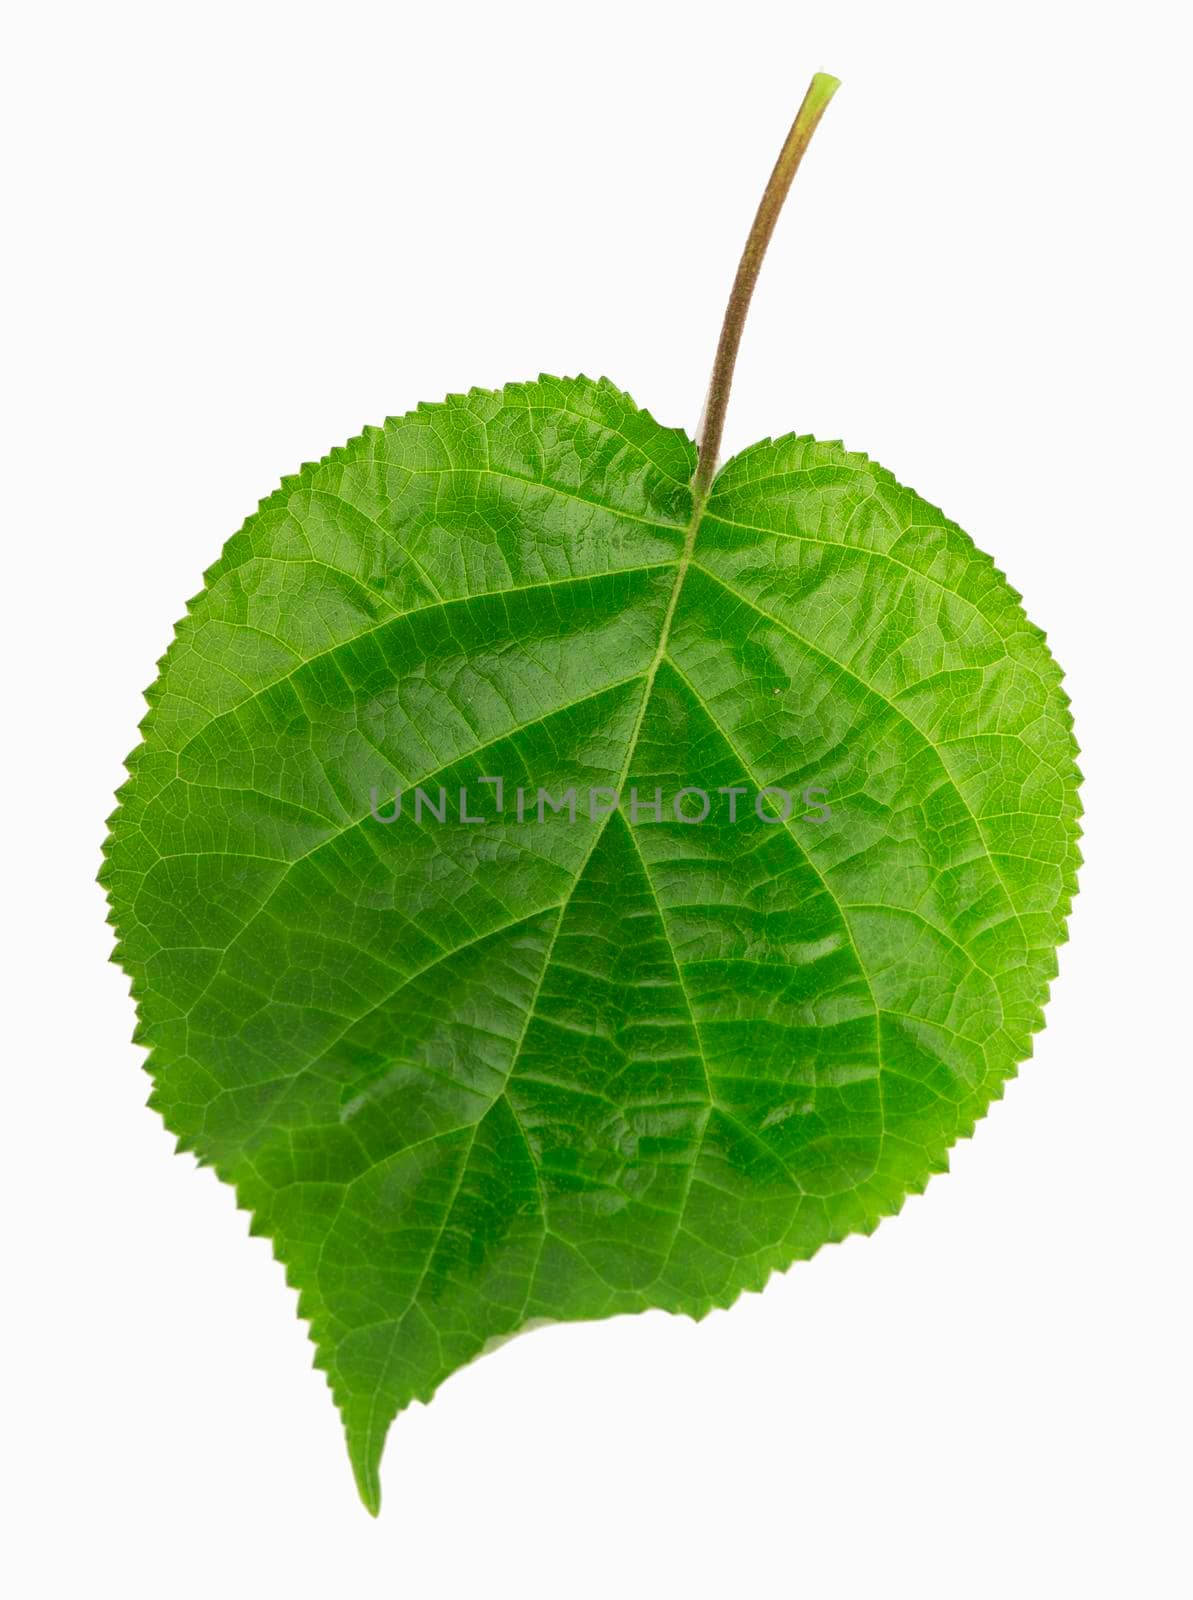 linden leaf. green leaf on white background by aprilphoto